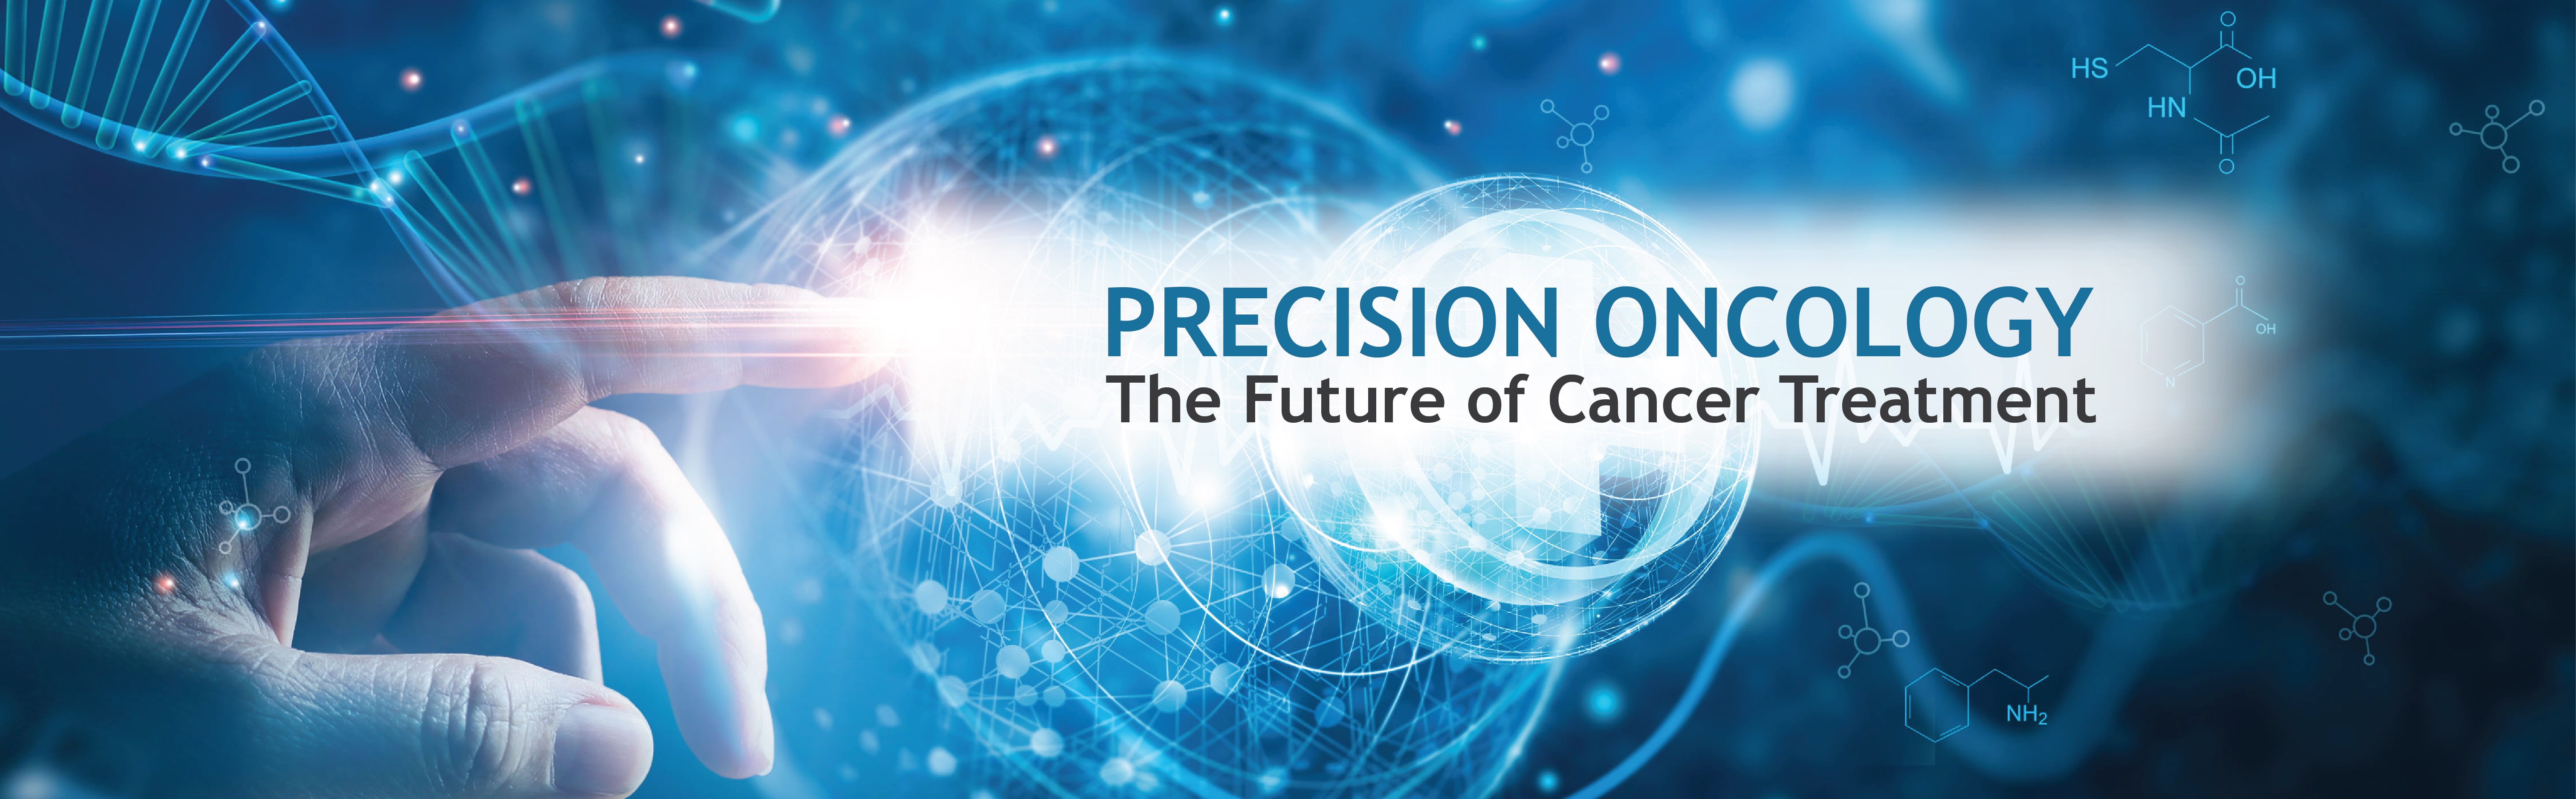 Oncology Precision-min